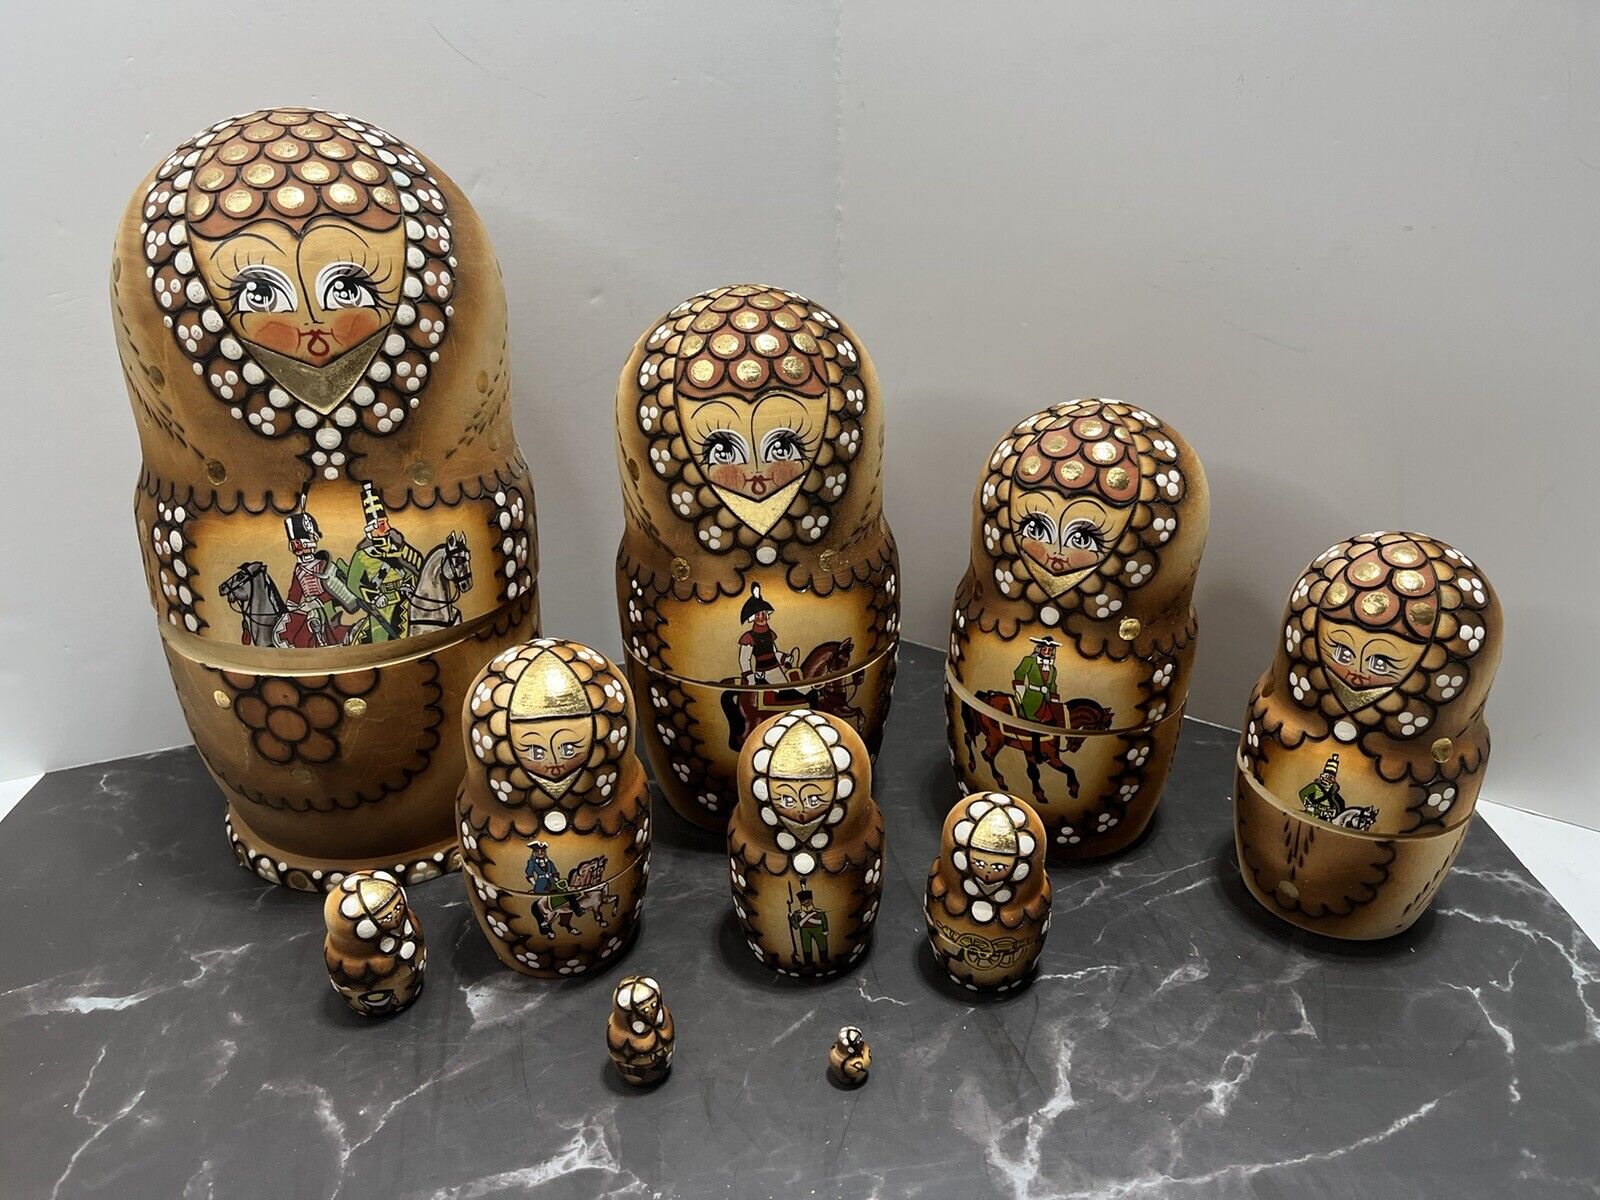 Vintage Russian Nesting Dolls 10 Piece Set Wooden Handmade